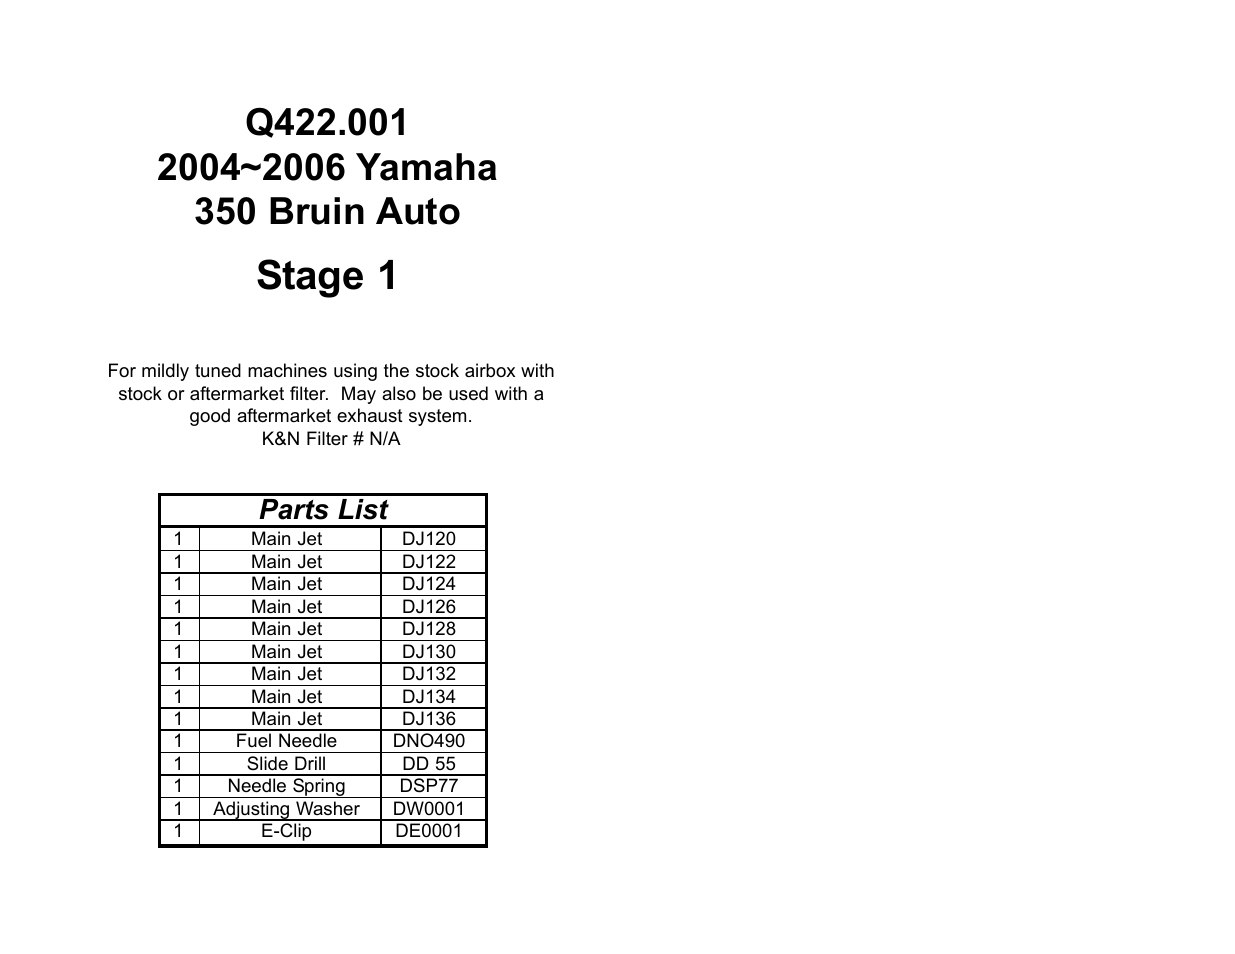 DynoJet Jet Kit for Yamaha Bruin 350 (04-06)